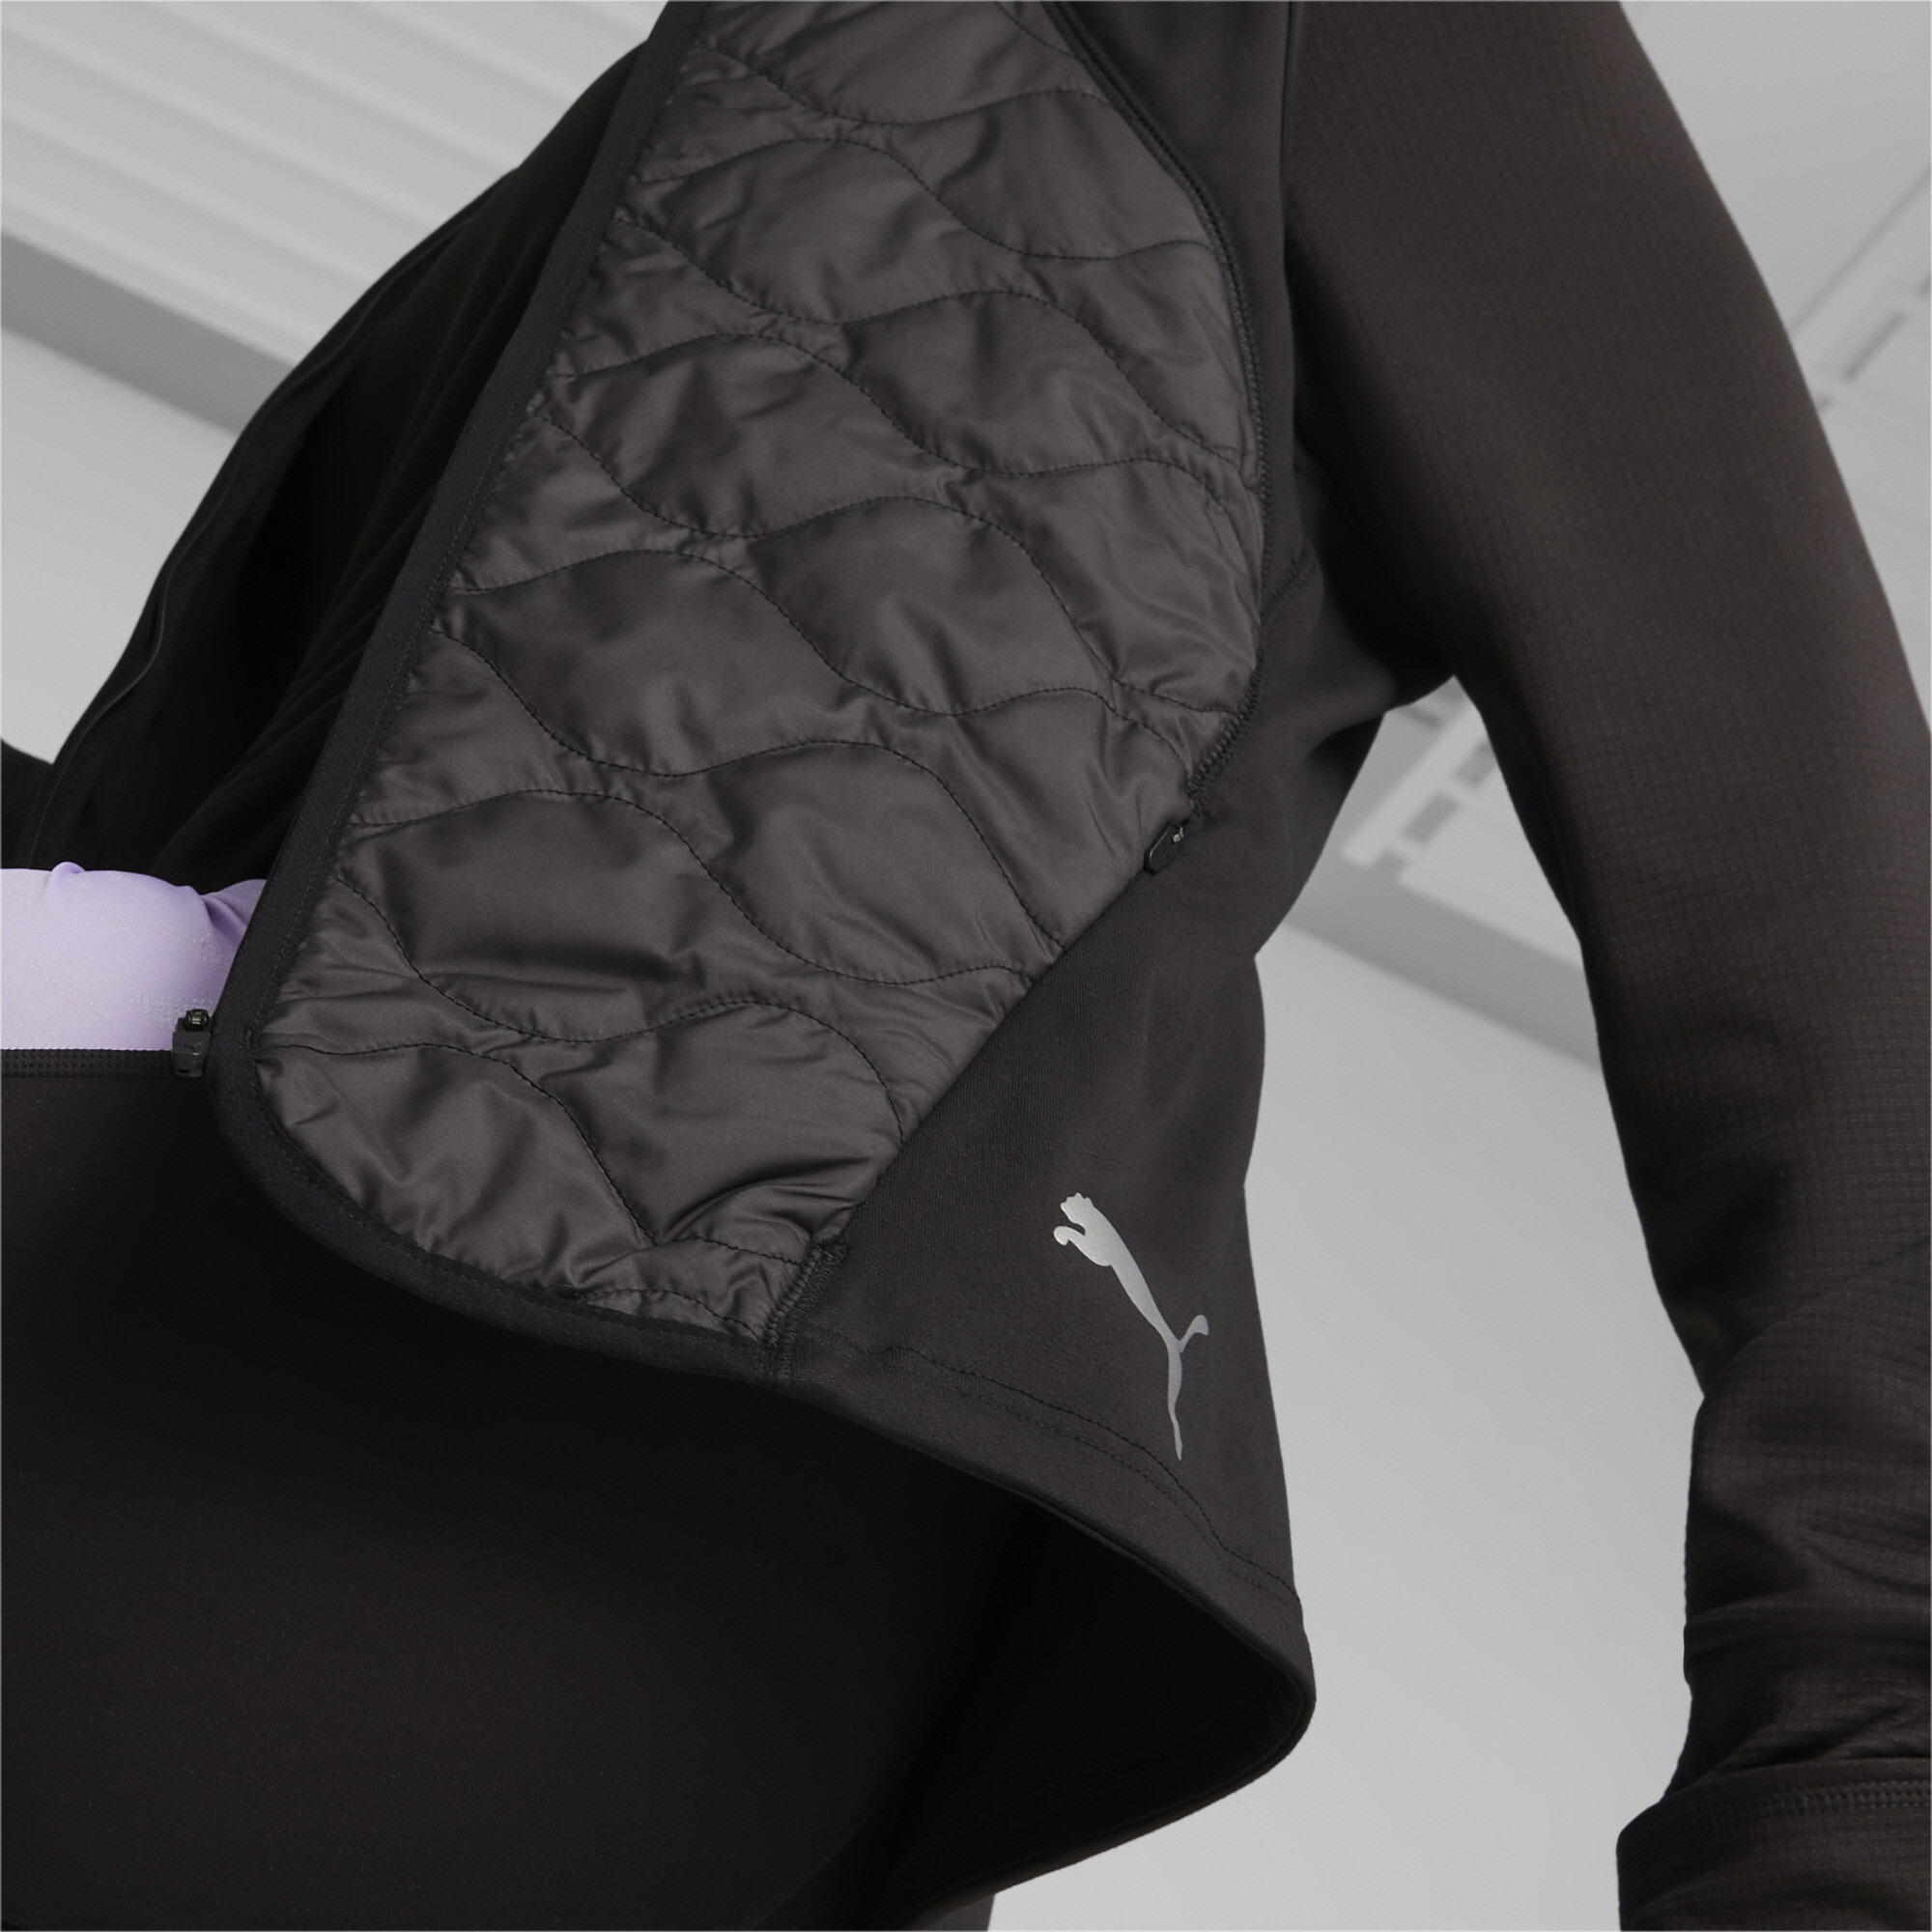 Women's PUMA RUN CLOUDSPUN WRMLBL Padded Running Vest In Black, Size XS